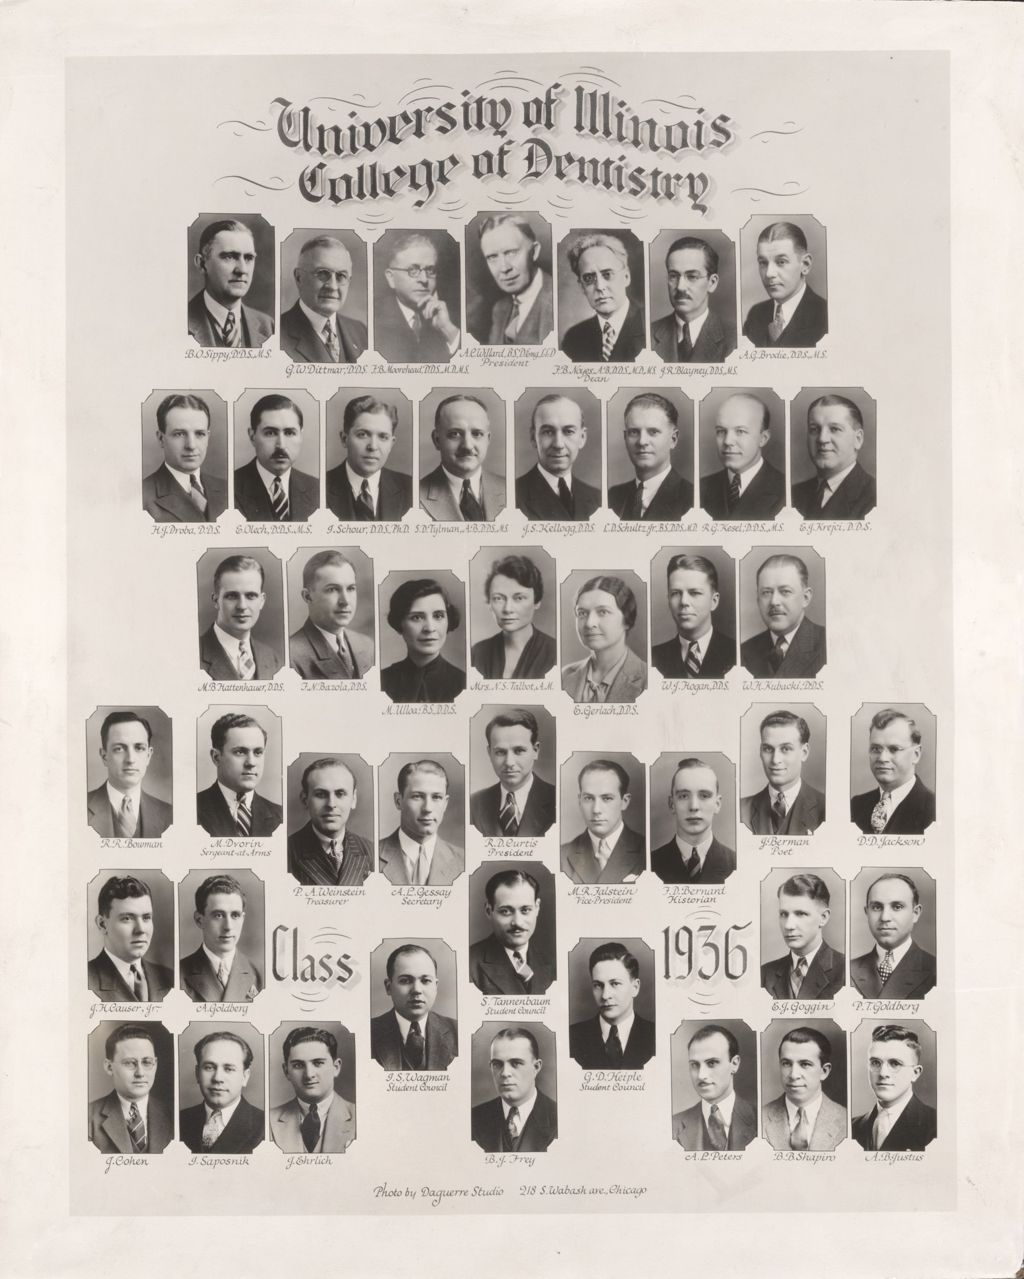 Miniature of 1936 graduating class, University of Illinois College of Dentistry